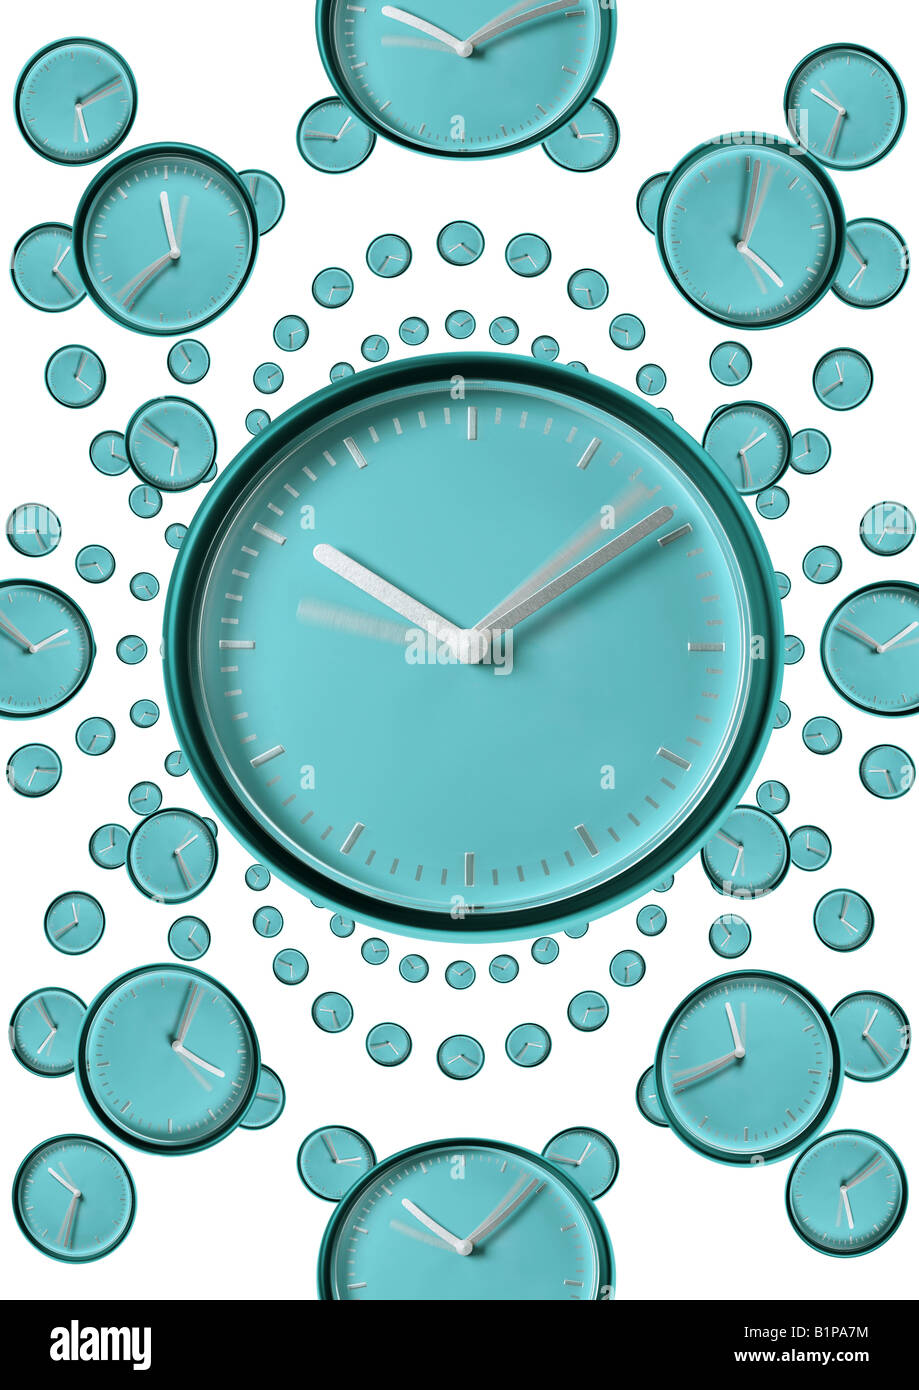 watches clocks stress Uhren Stress Stock Photo